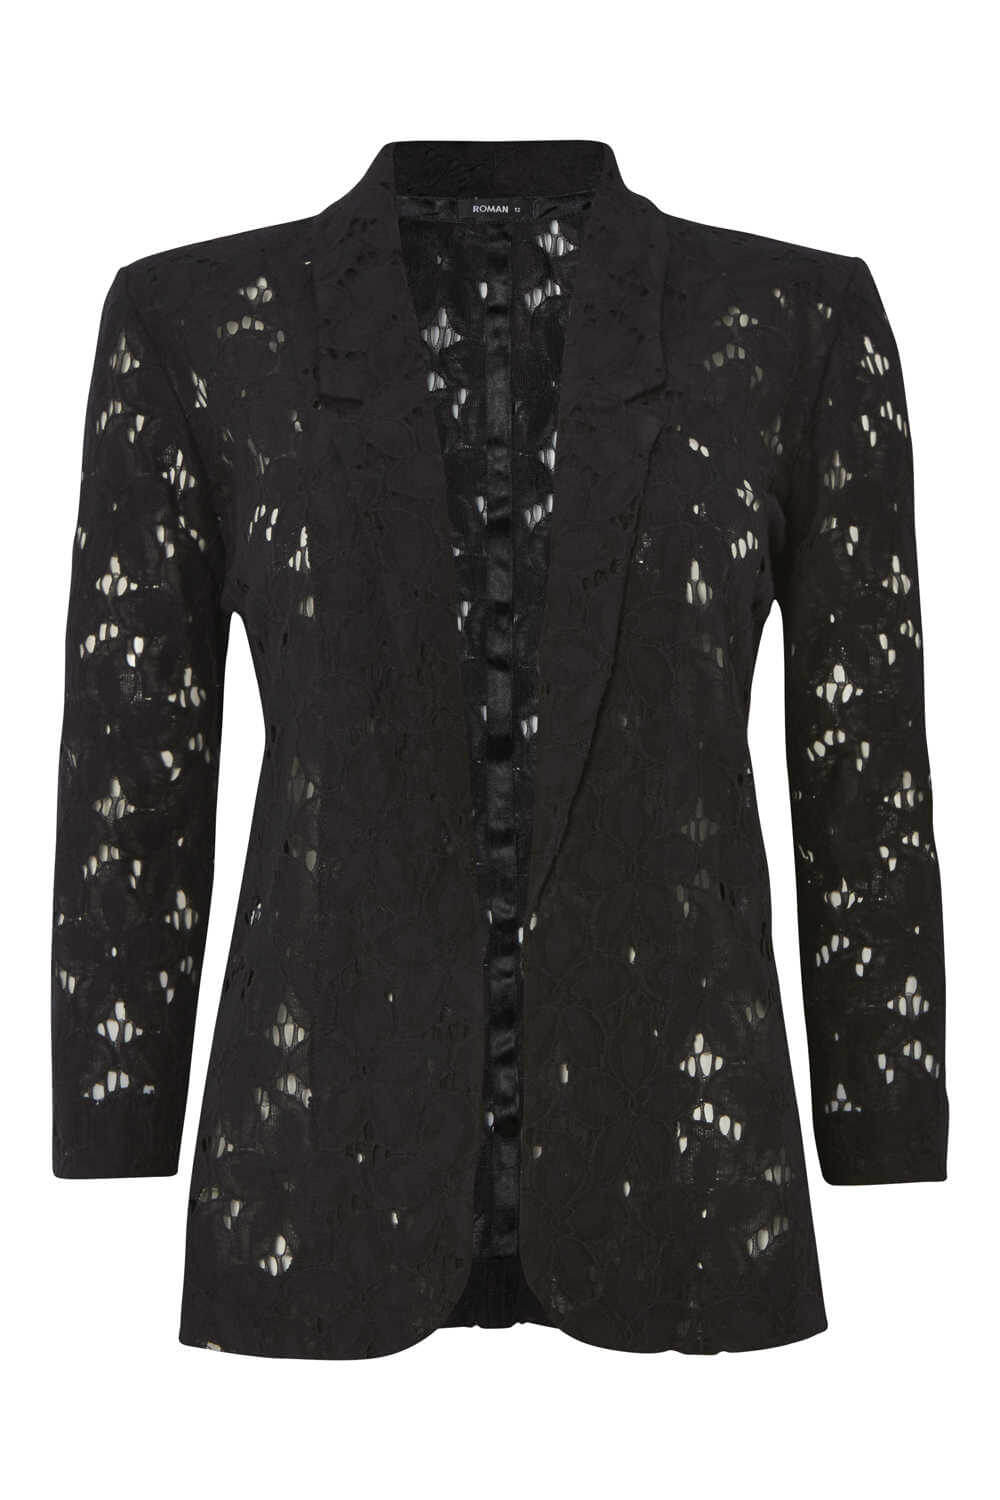 Floral Lace Jacket in Black - Roman Originals UK